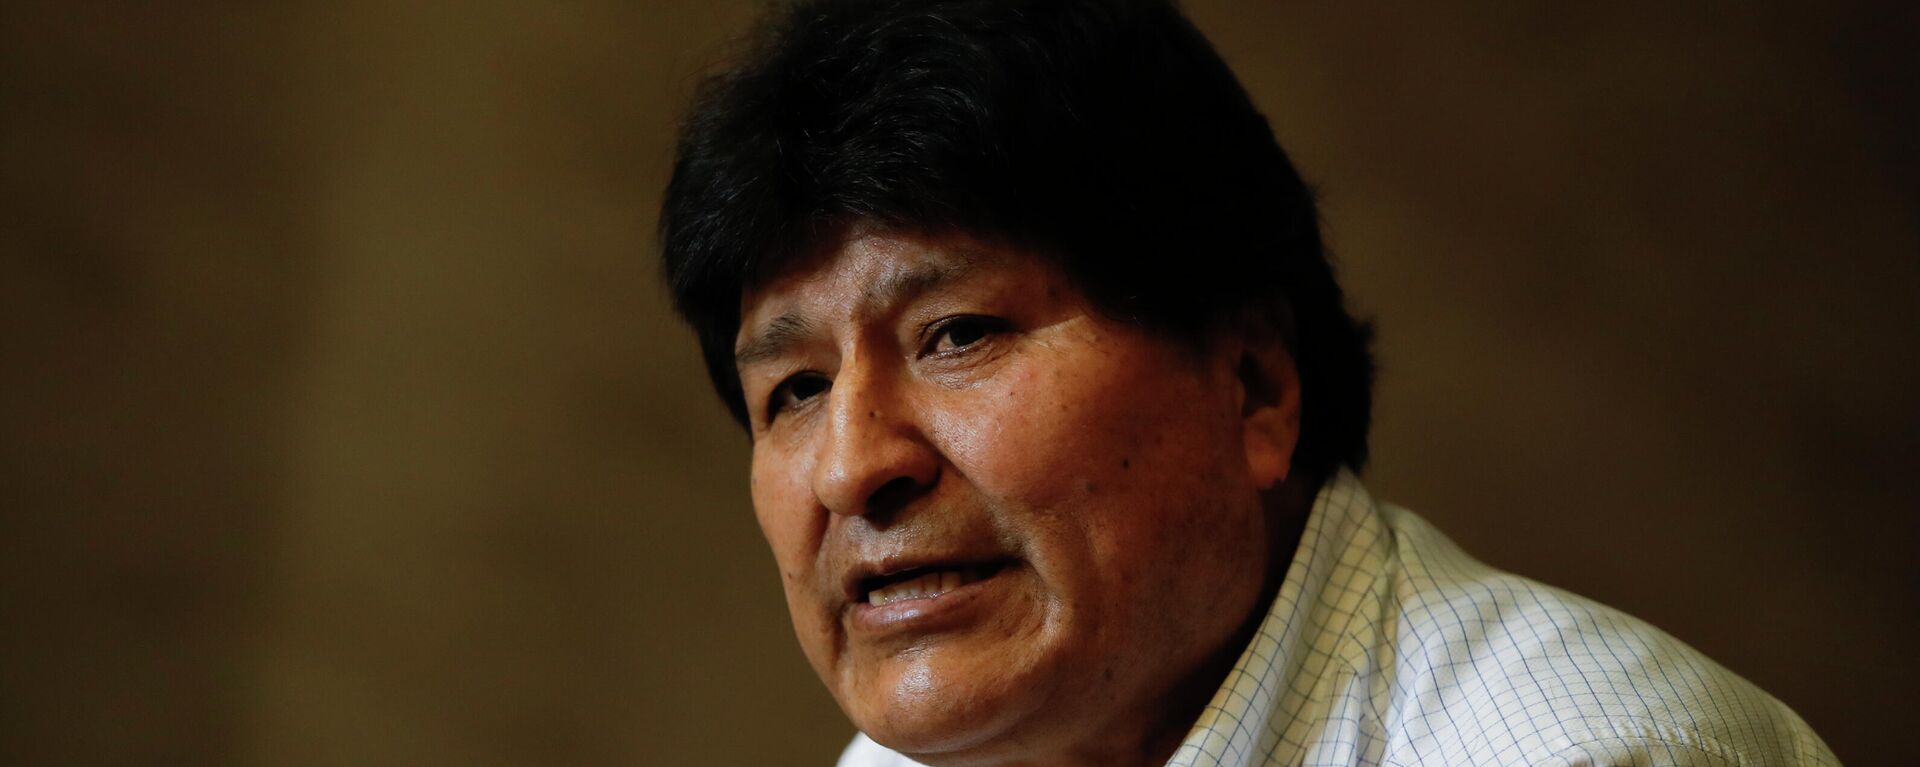 El expresidente socialista boliviano Evo Morales (2006-2019) - Sputnik Mundo, 1920, 14.06.2022